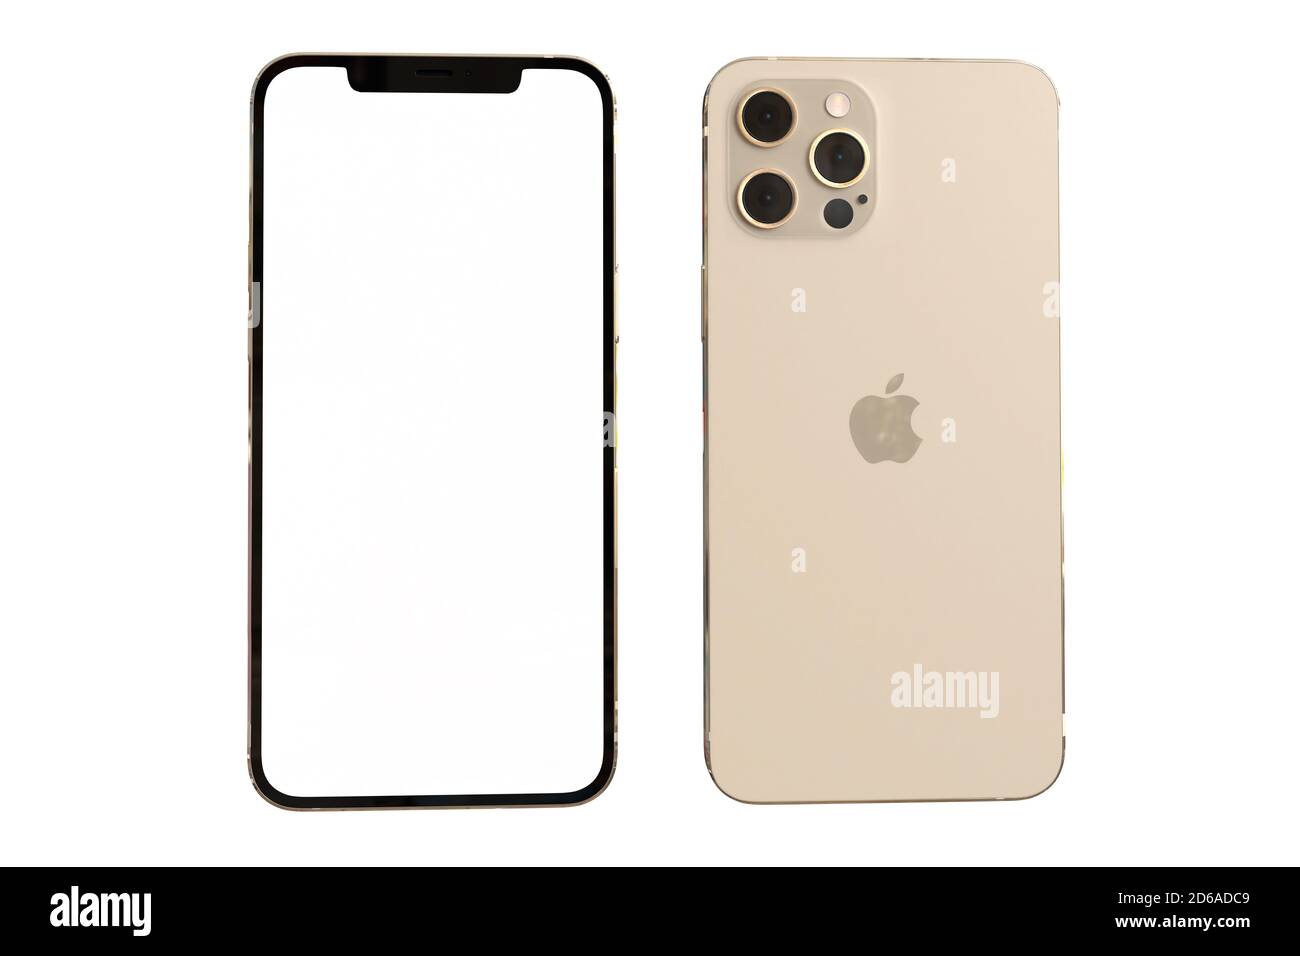 Iphone 12 pro max -Fotos und -Bildmaterial in hoher Auflösung – Alamy